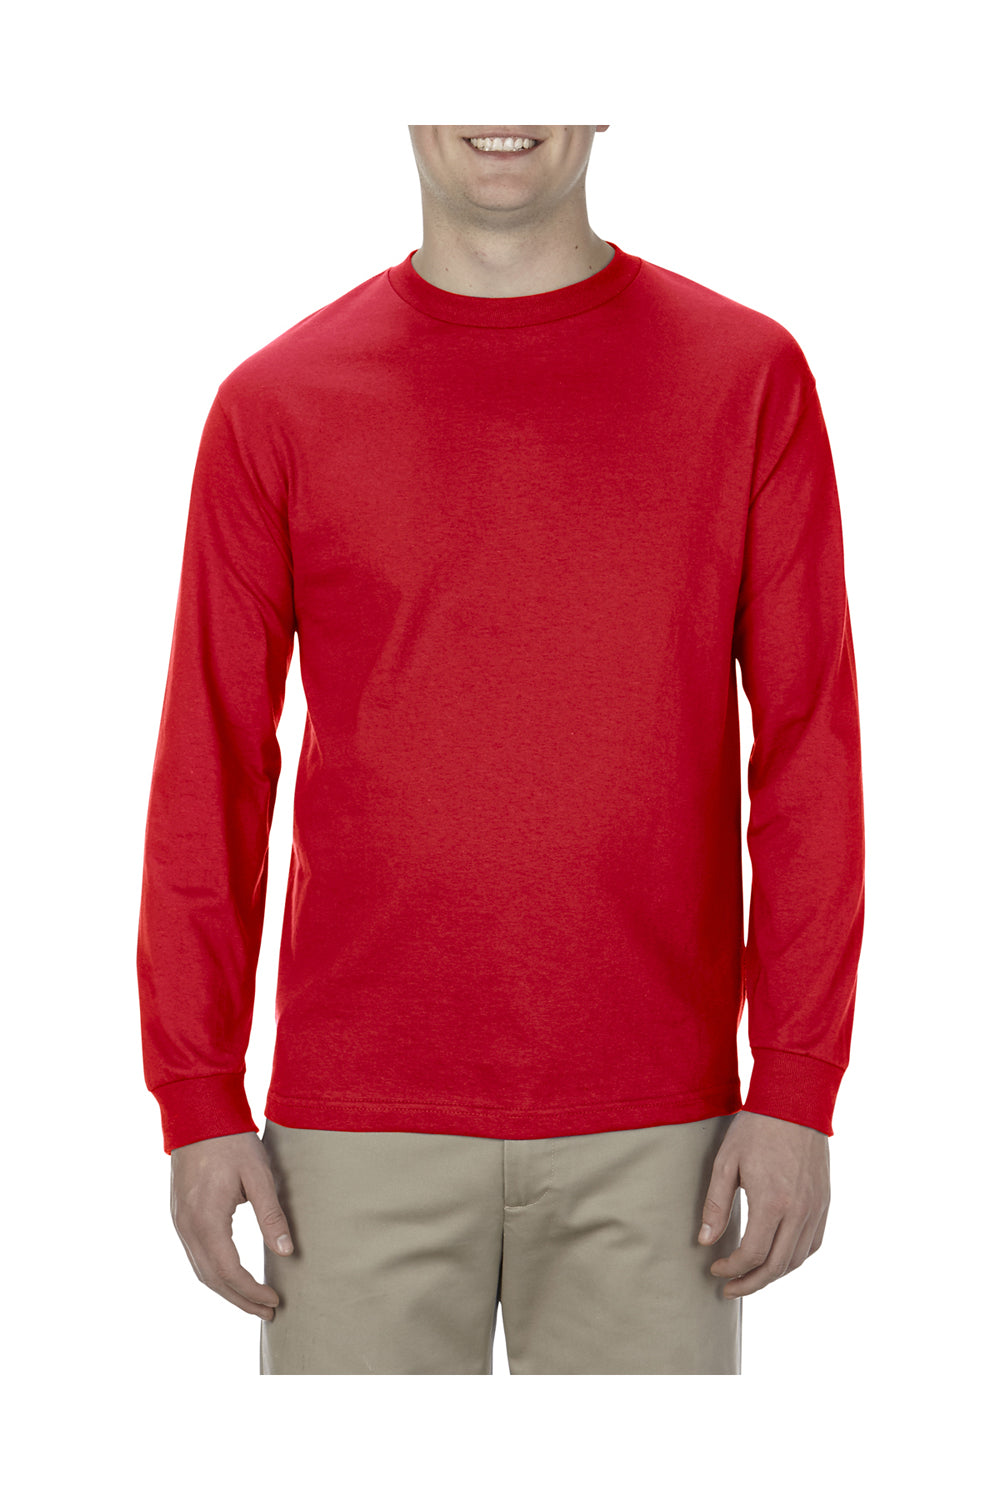 Alstyle AL1304 Mens Long Sleeve Crewneck T-Shirt Red Front